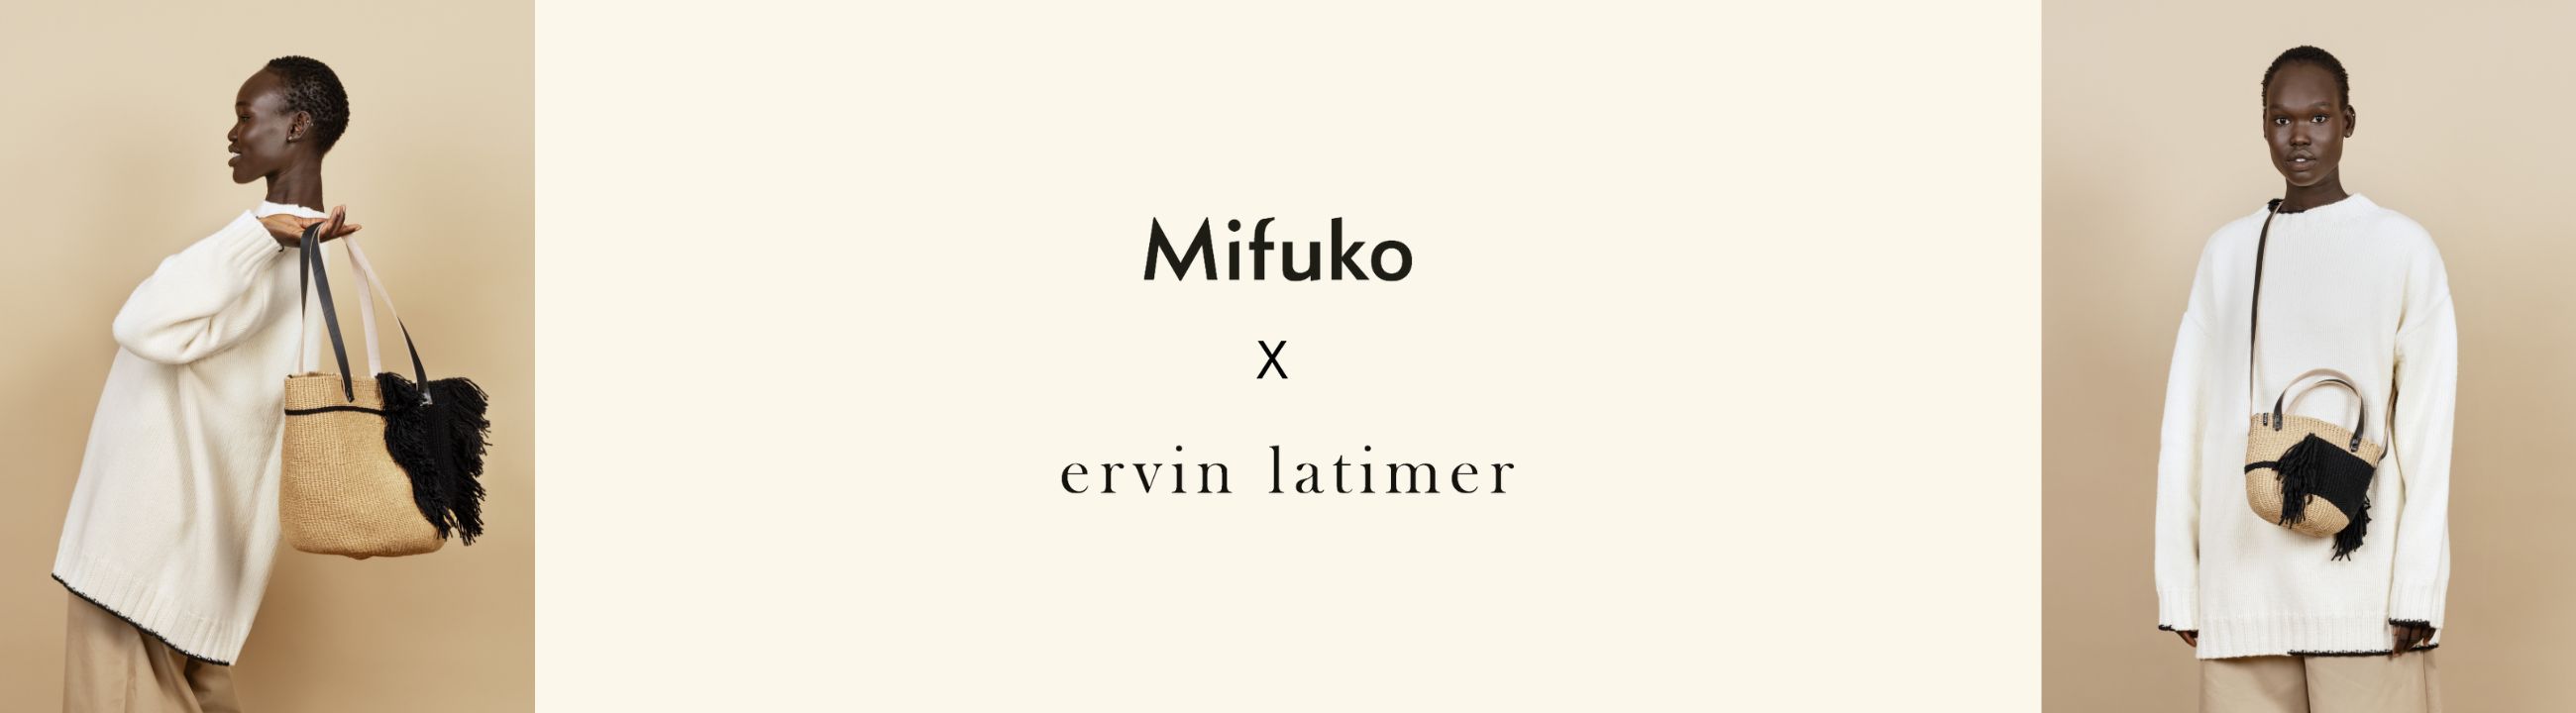 Mifuko x Ervin Latimer